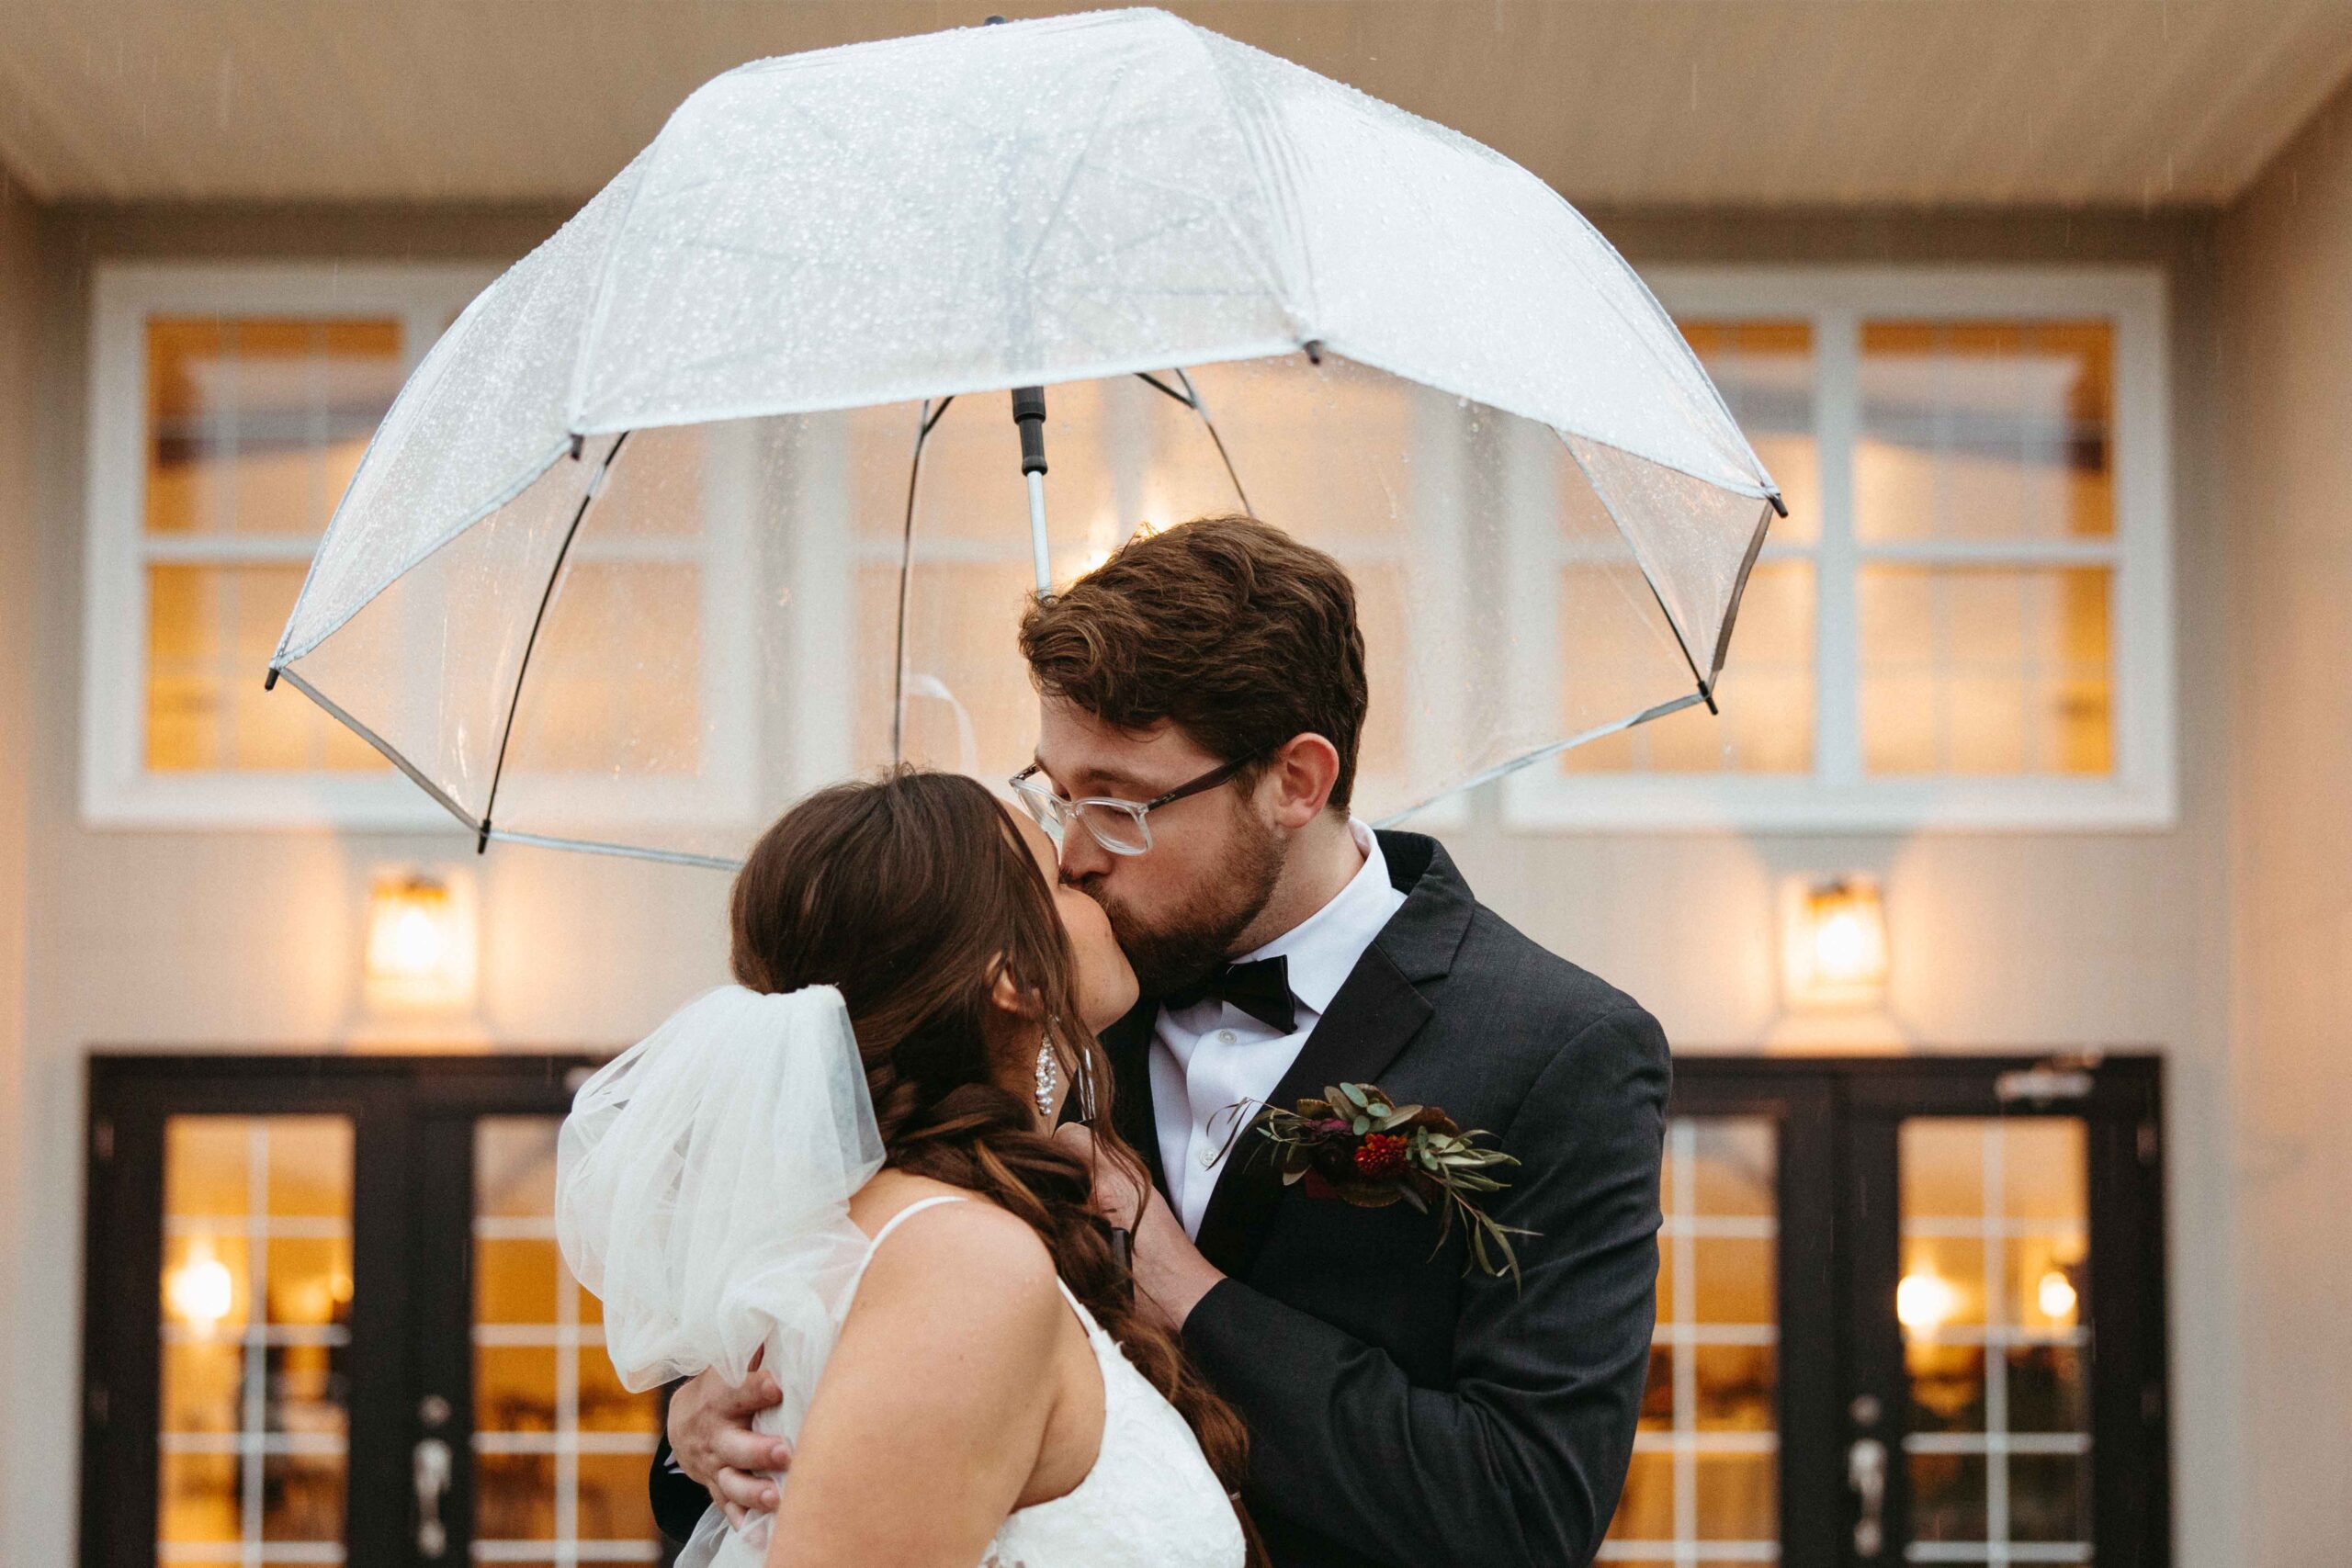 Wedding couple under umbrella on their rainy wedding day